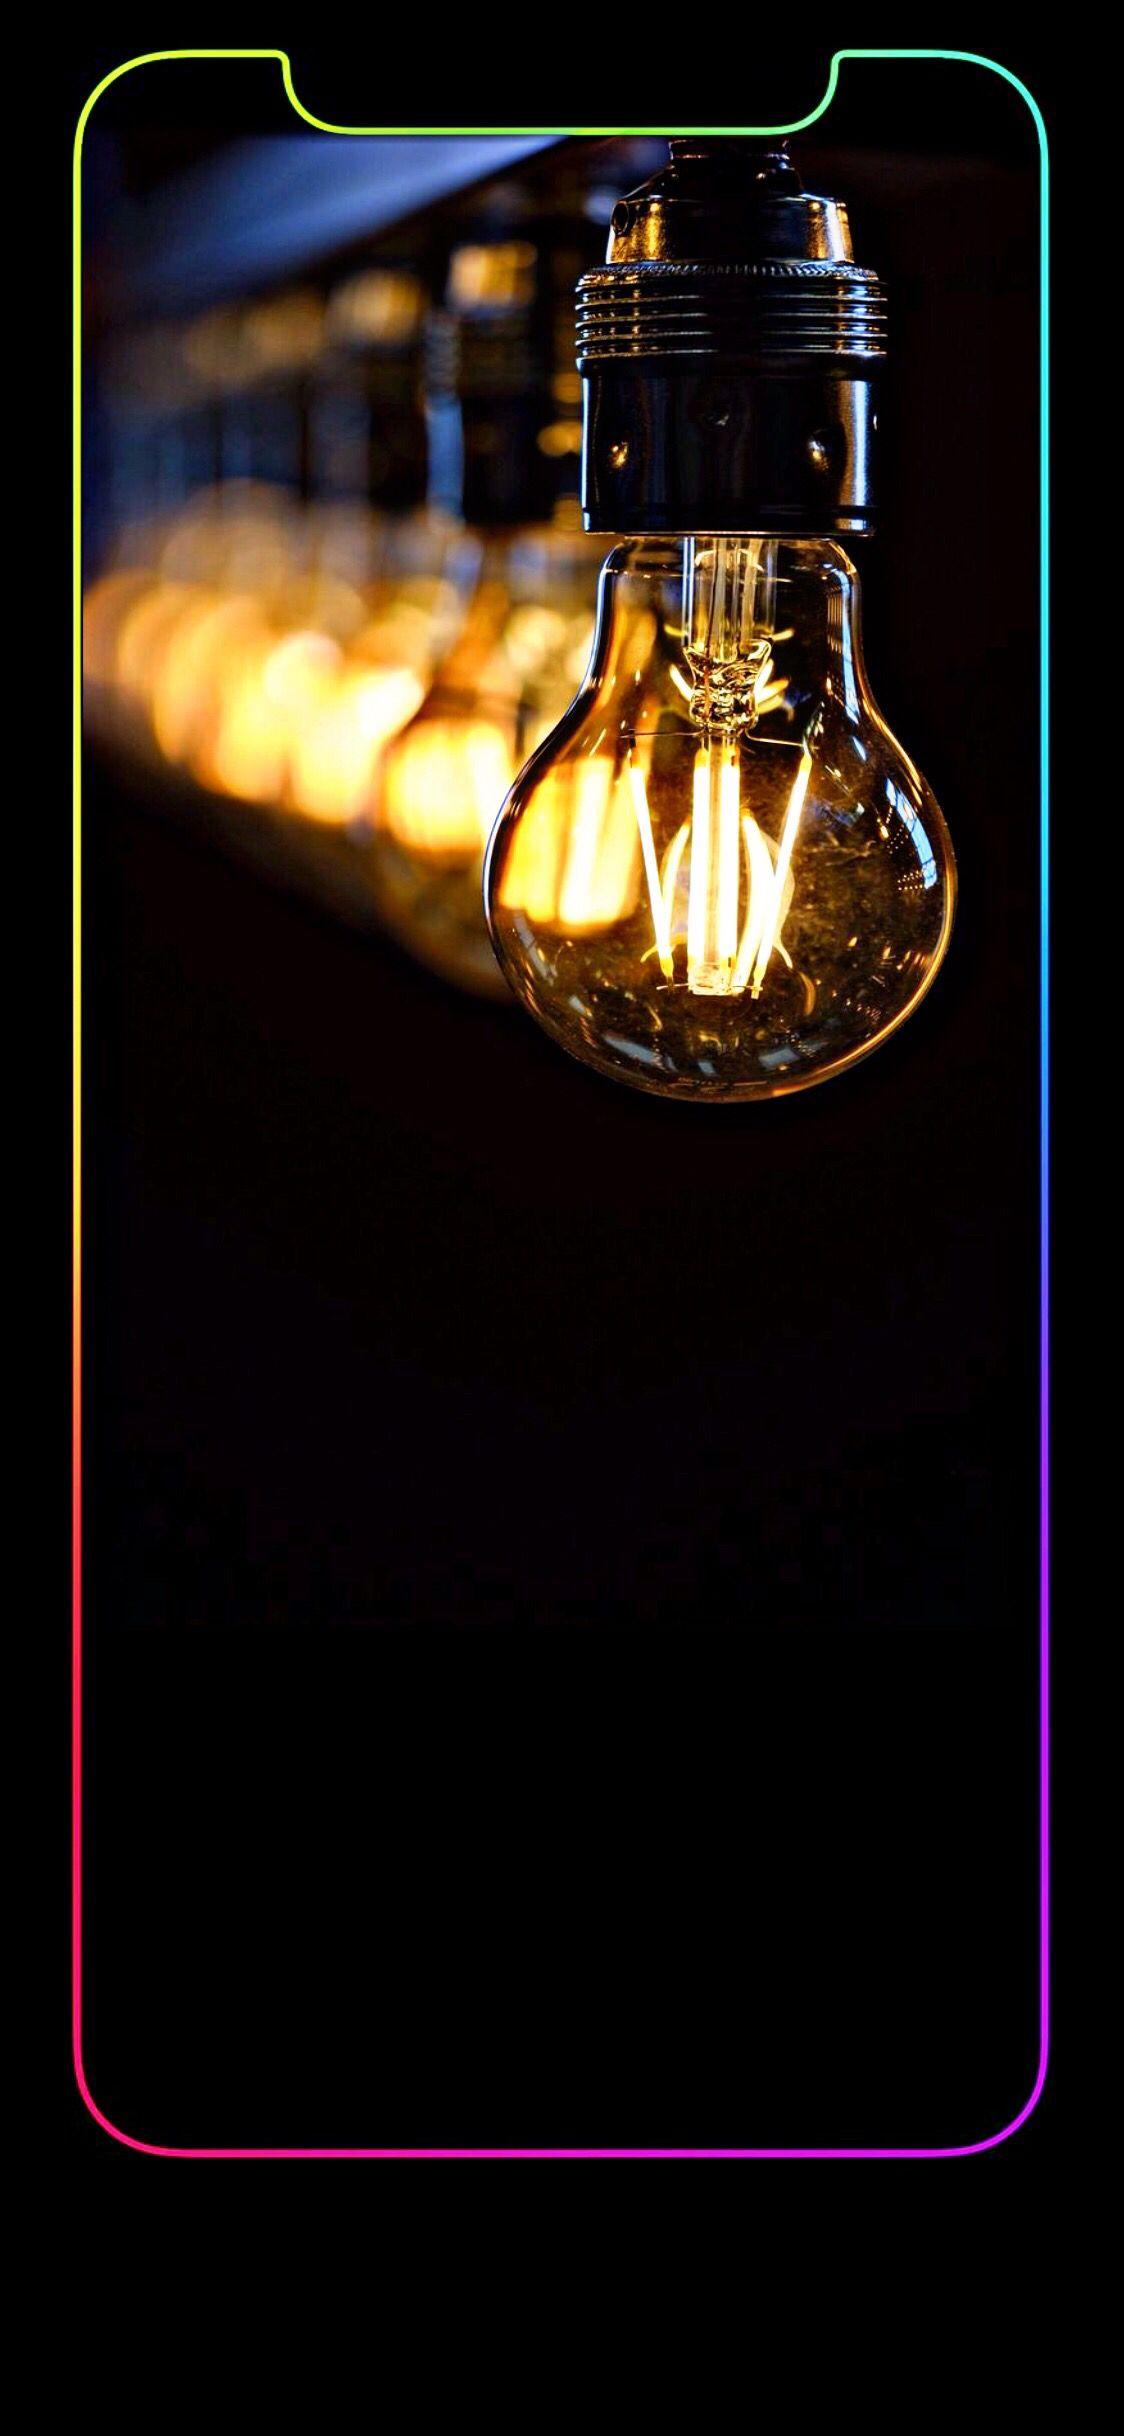 38 Light Mode IPhone Wallpapers  WallpaperSafari